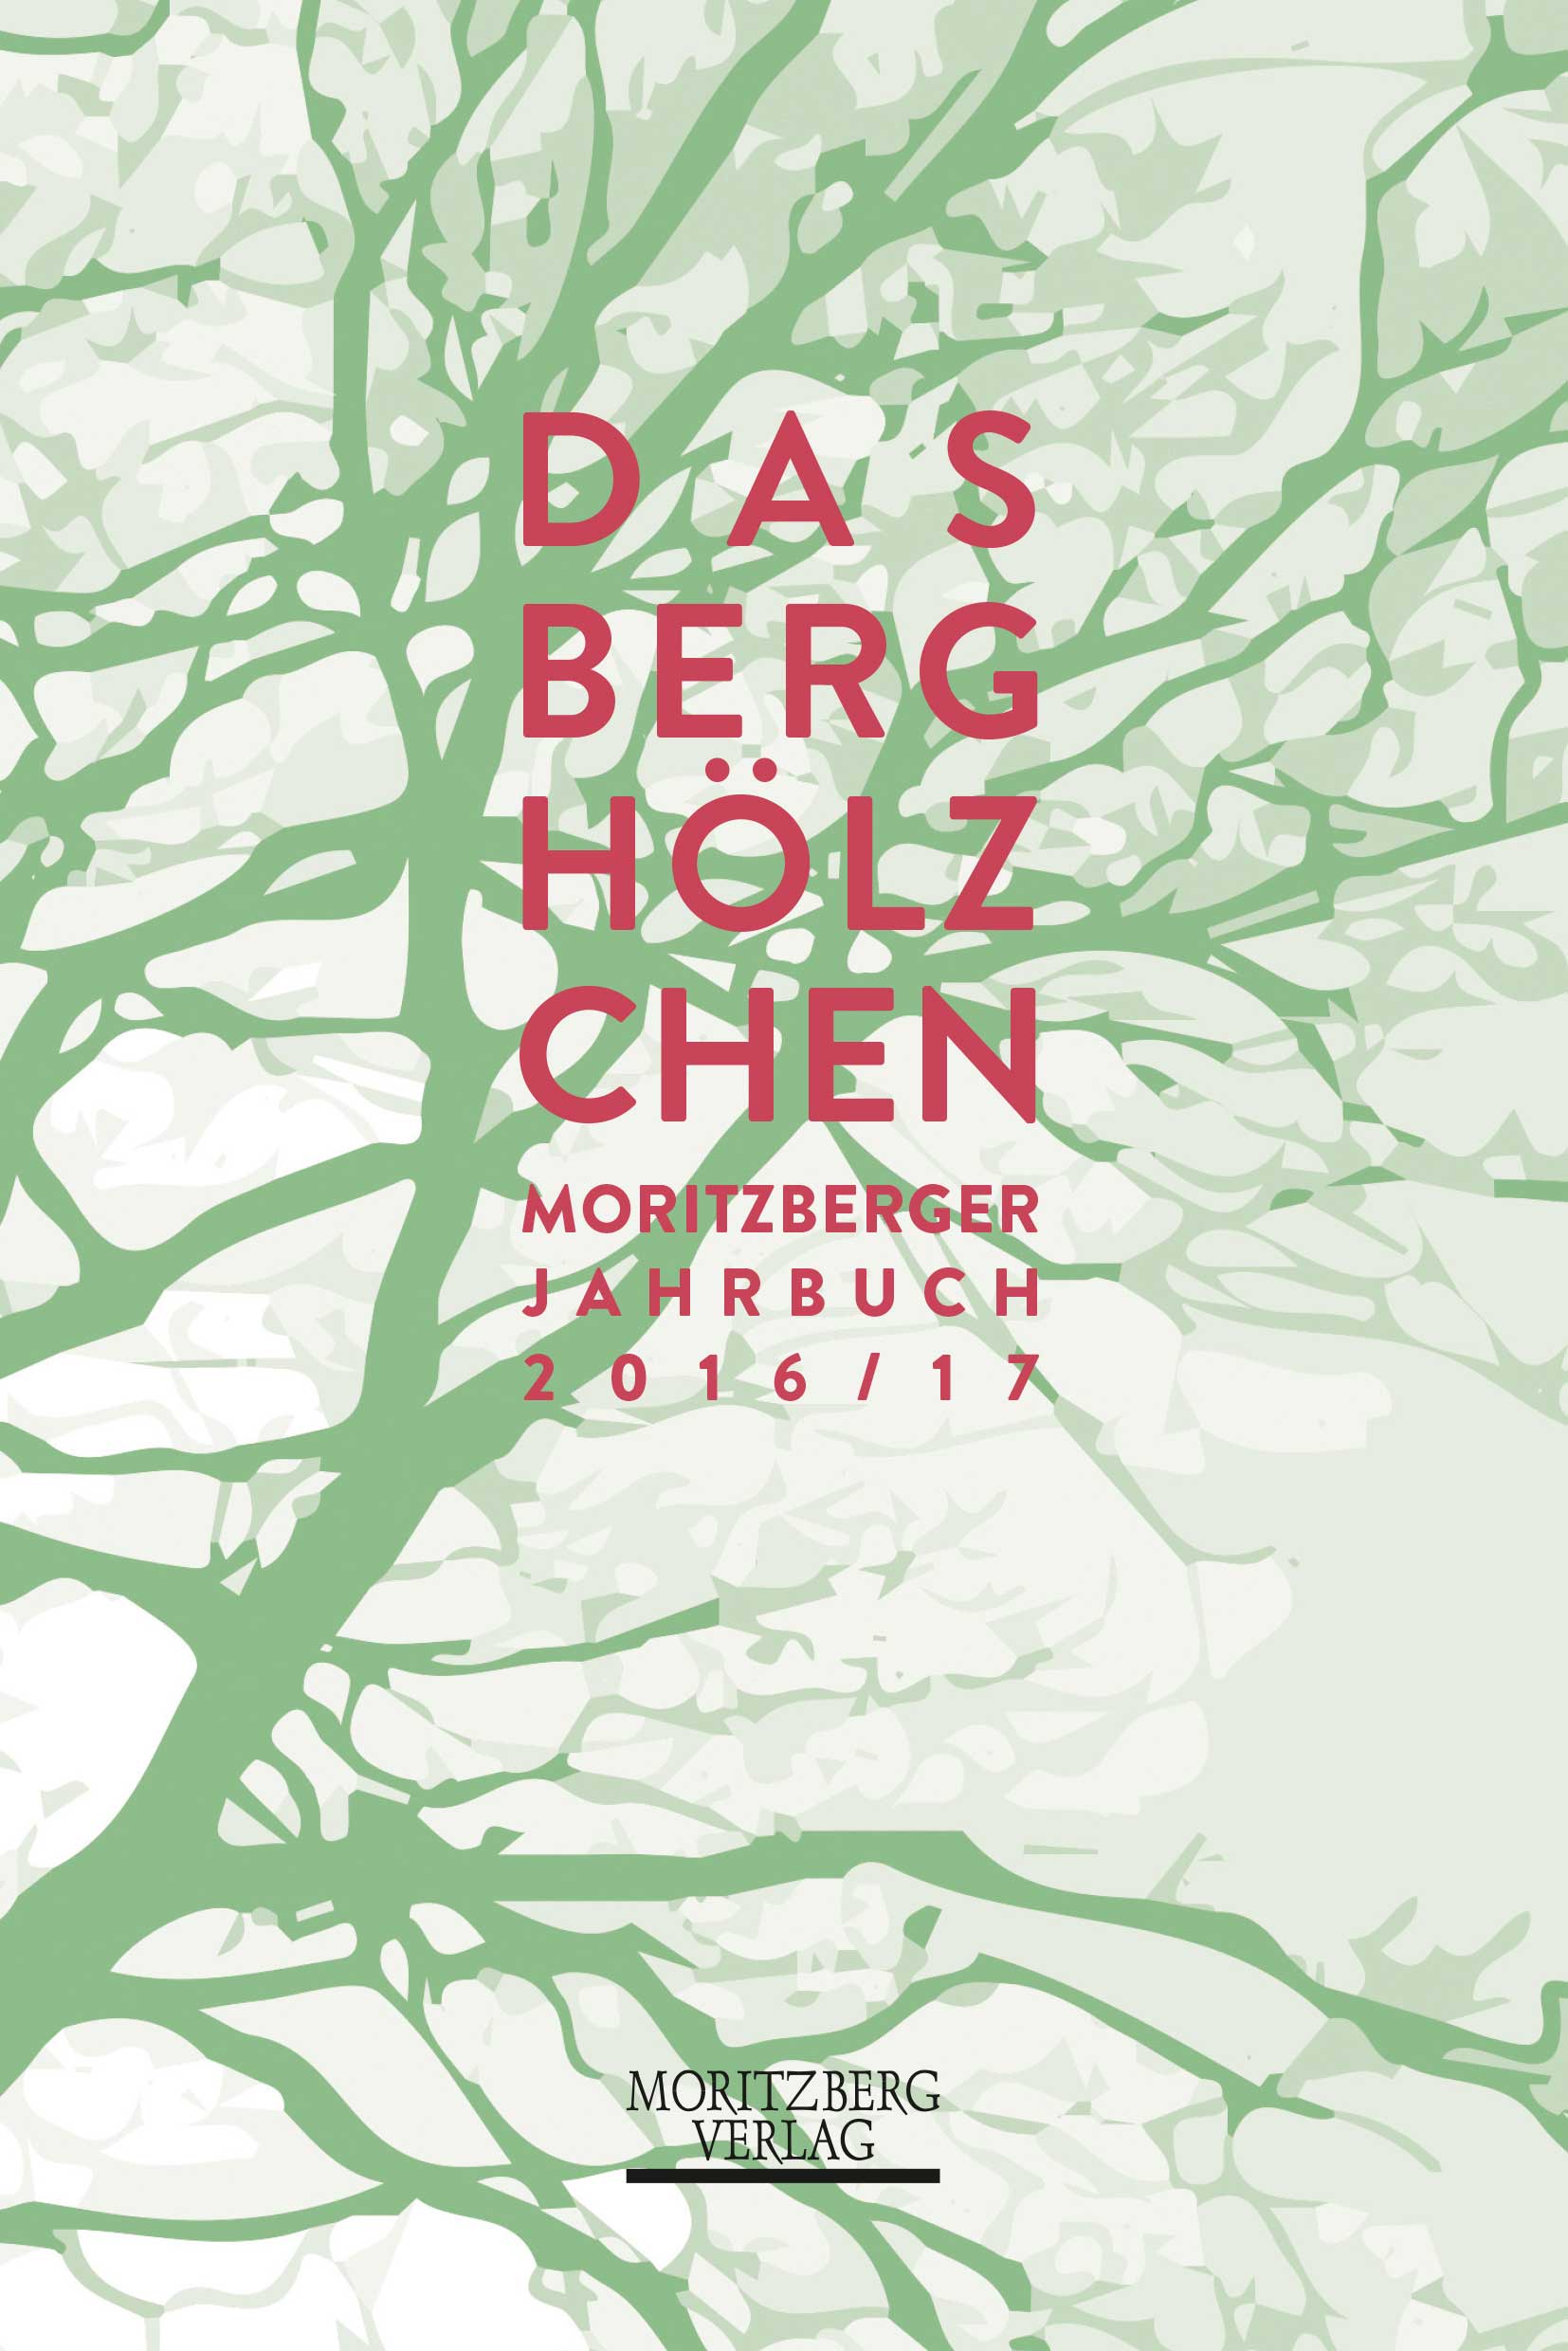 Moritzberger Jahrbuch 2016-17